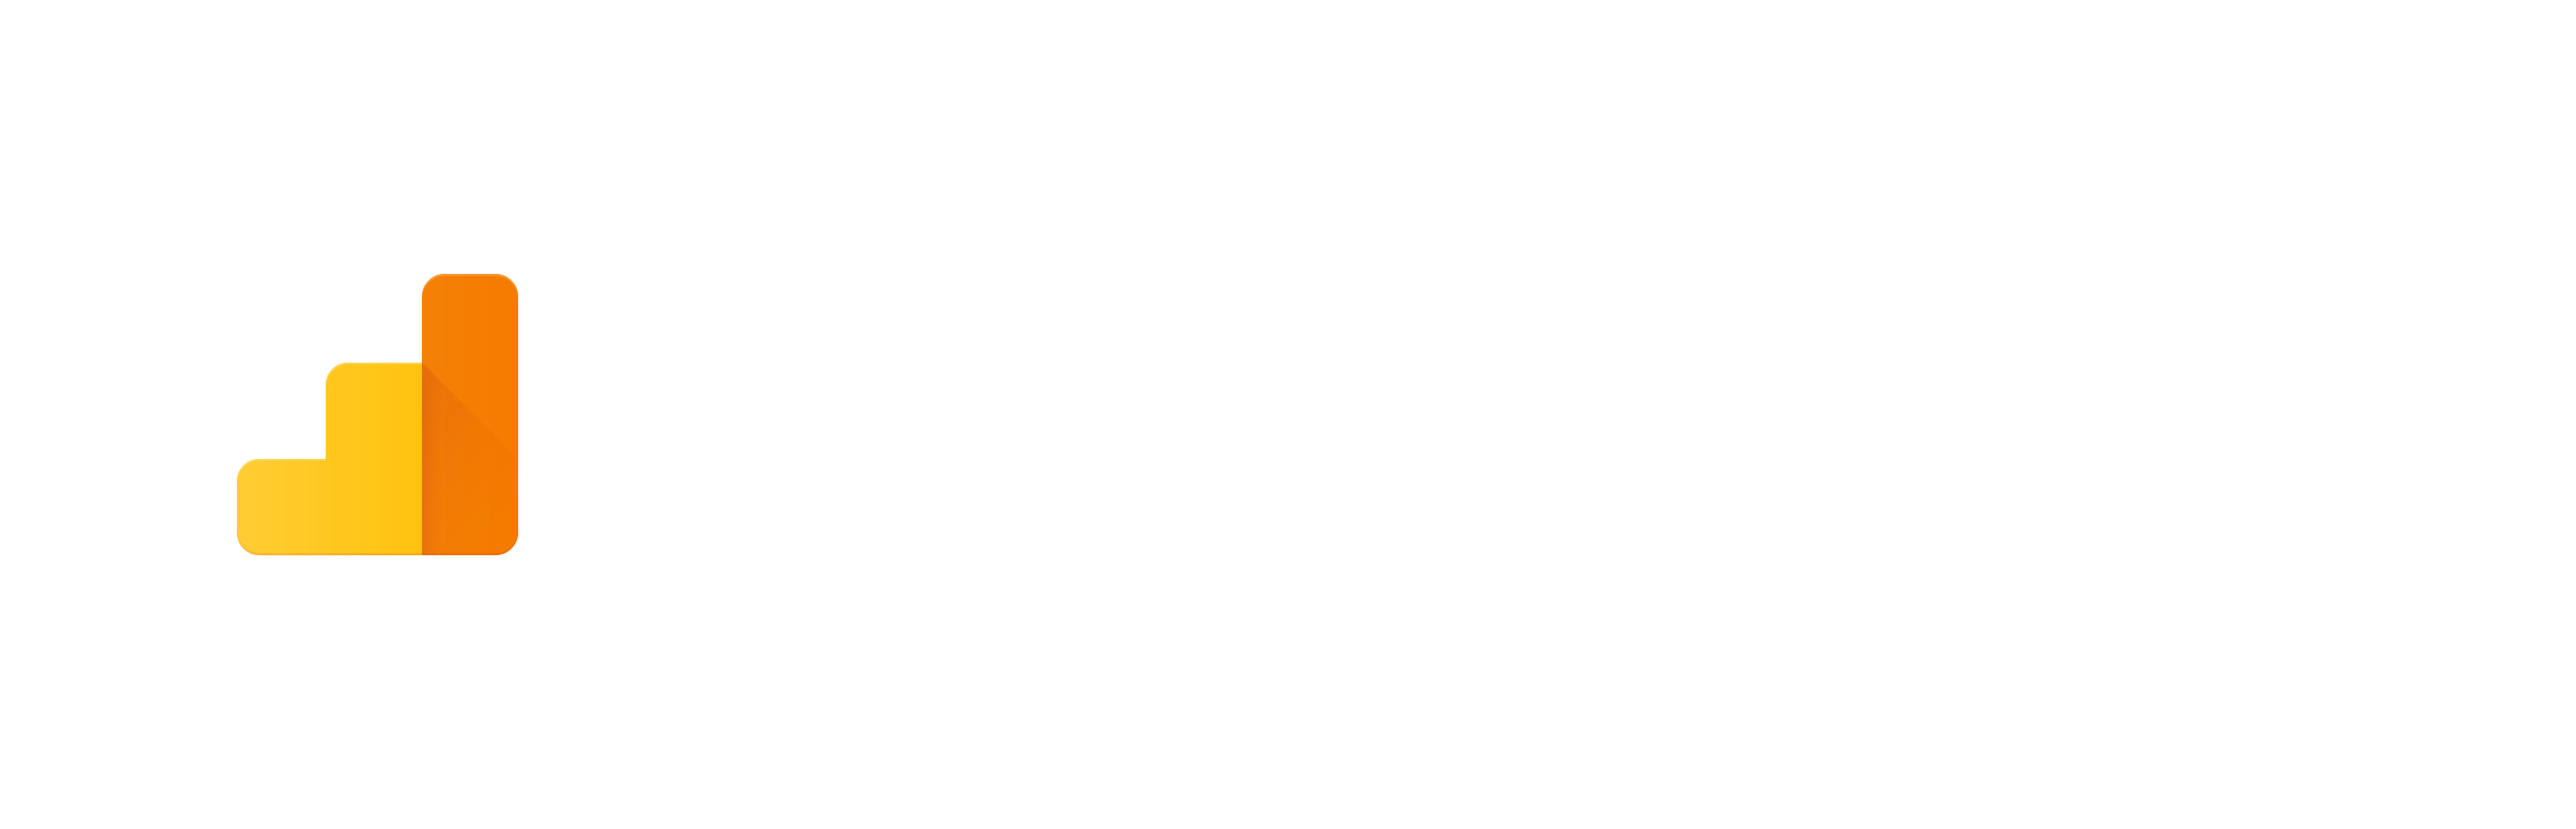 Google Anlytics